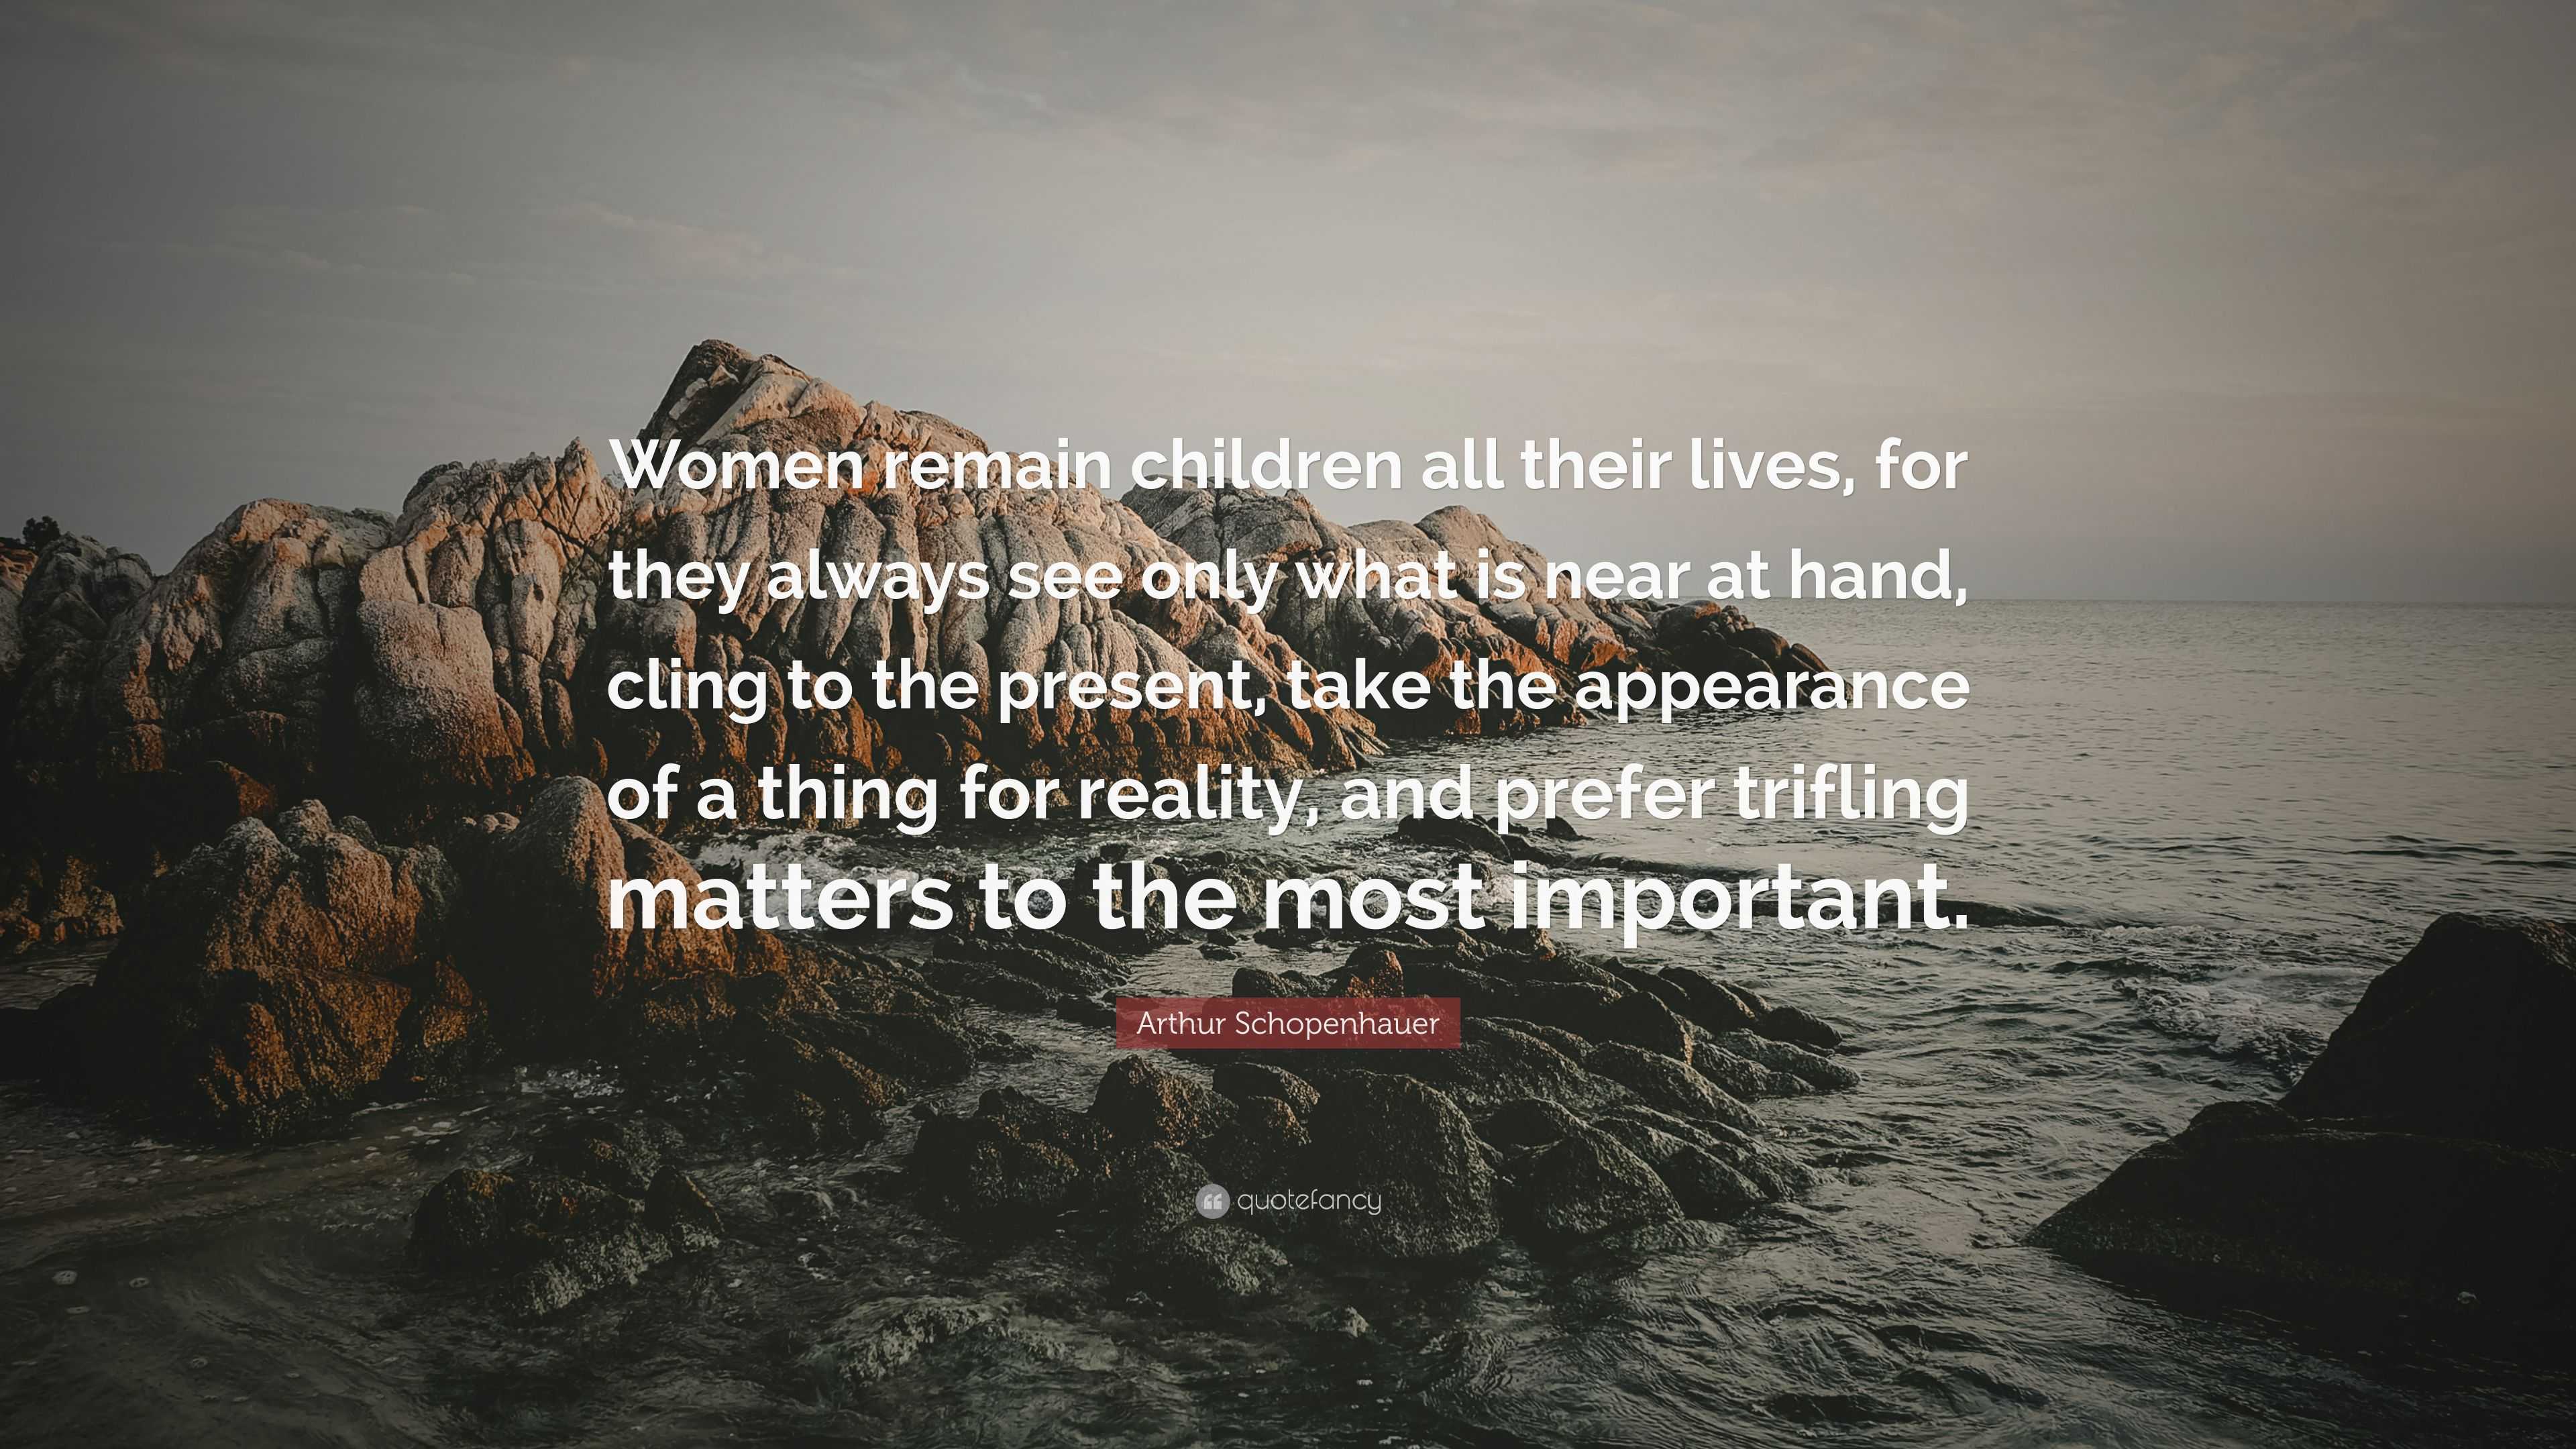 Arthur Schopenhauer Quote: “Women remain children all their lives, for ...